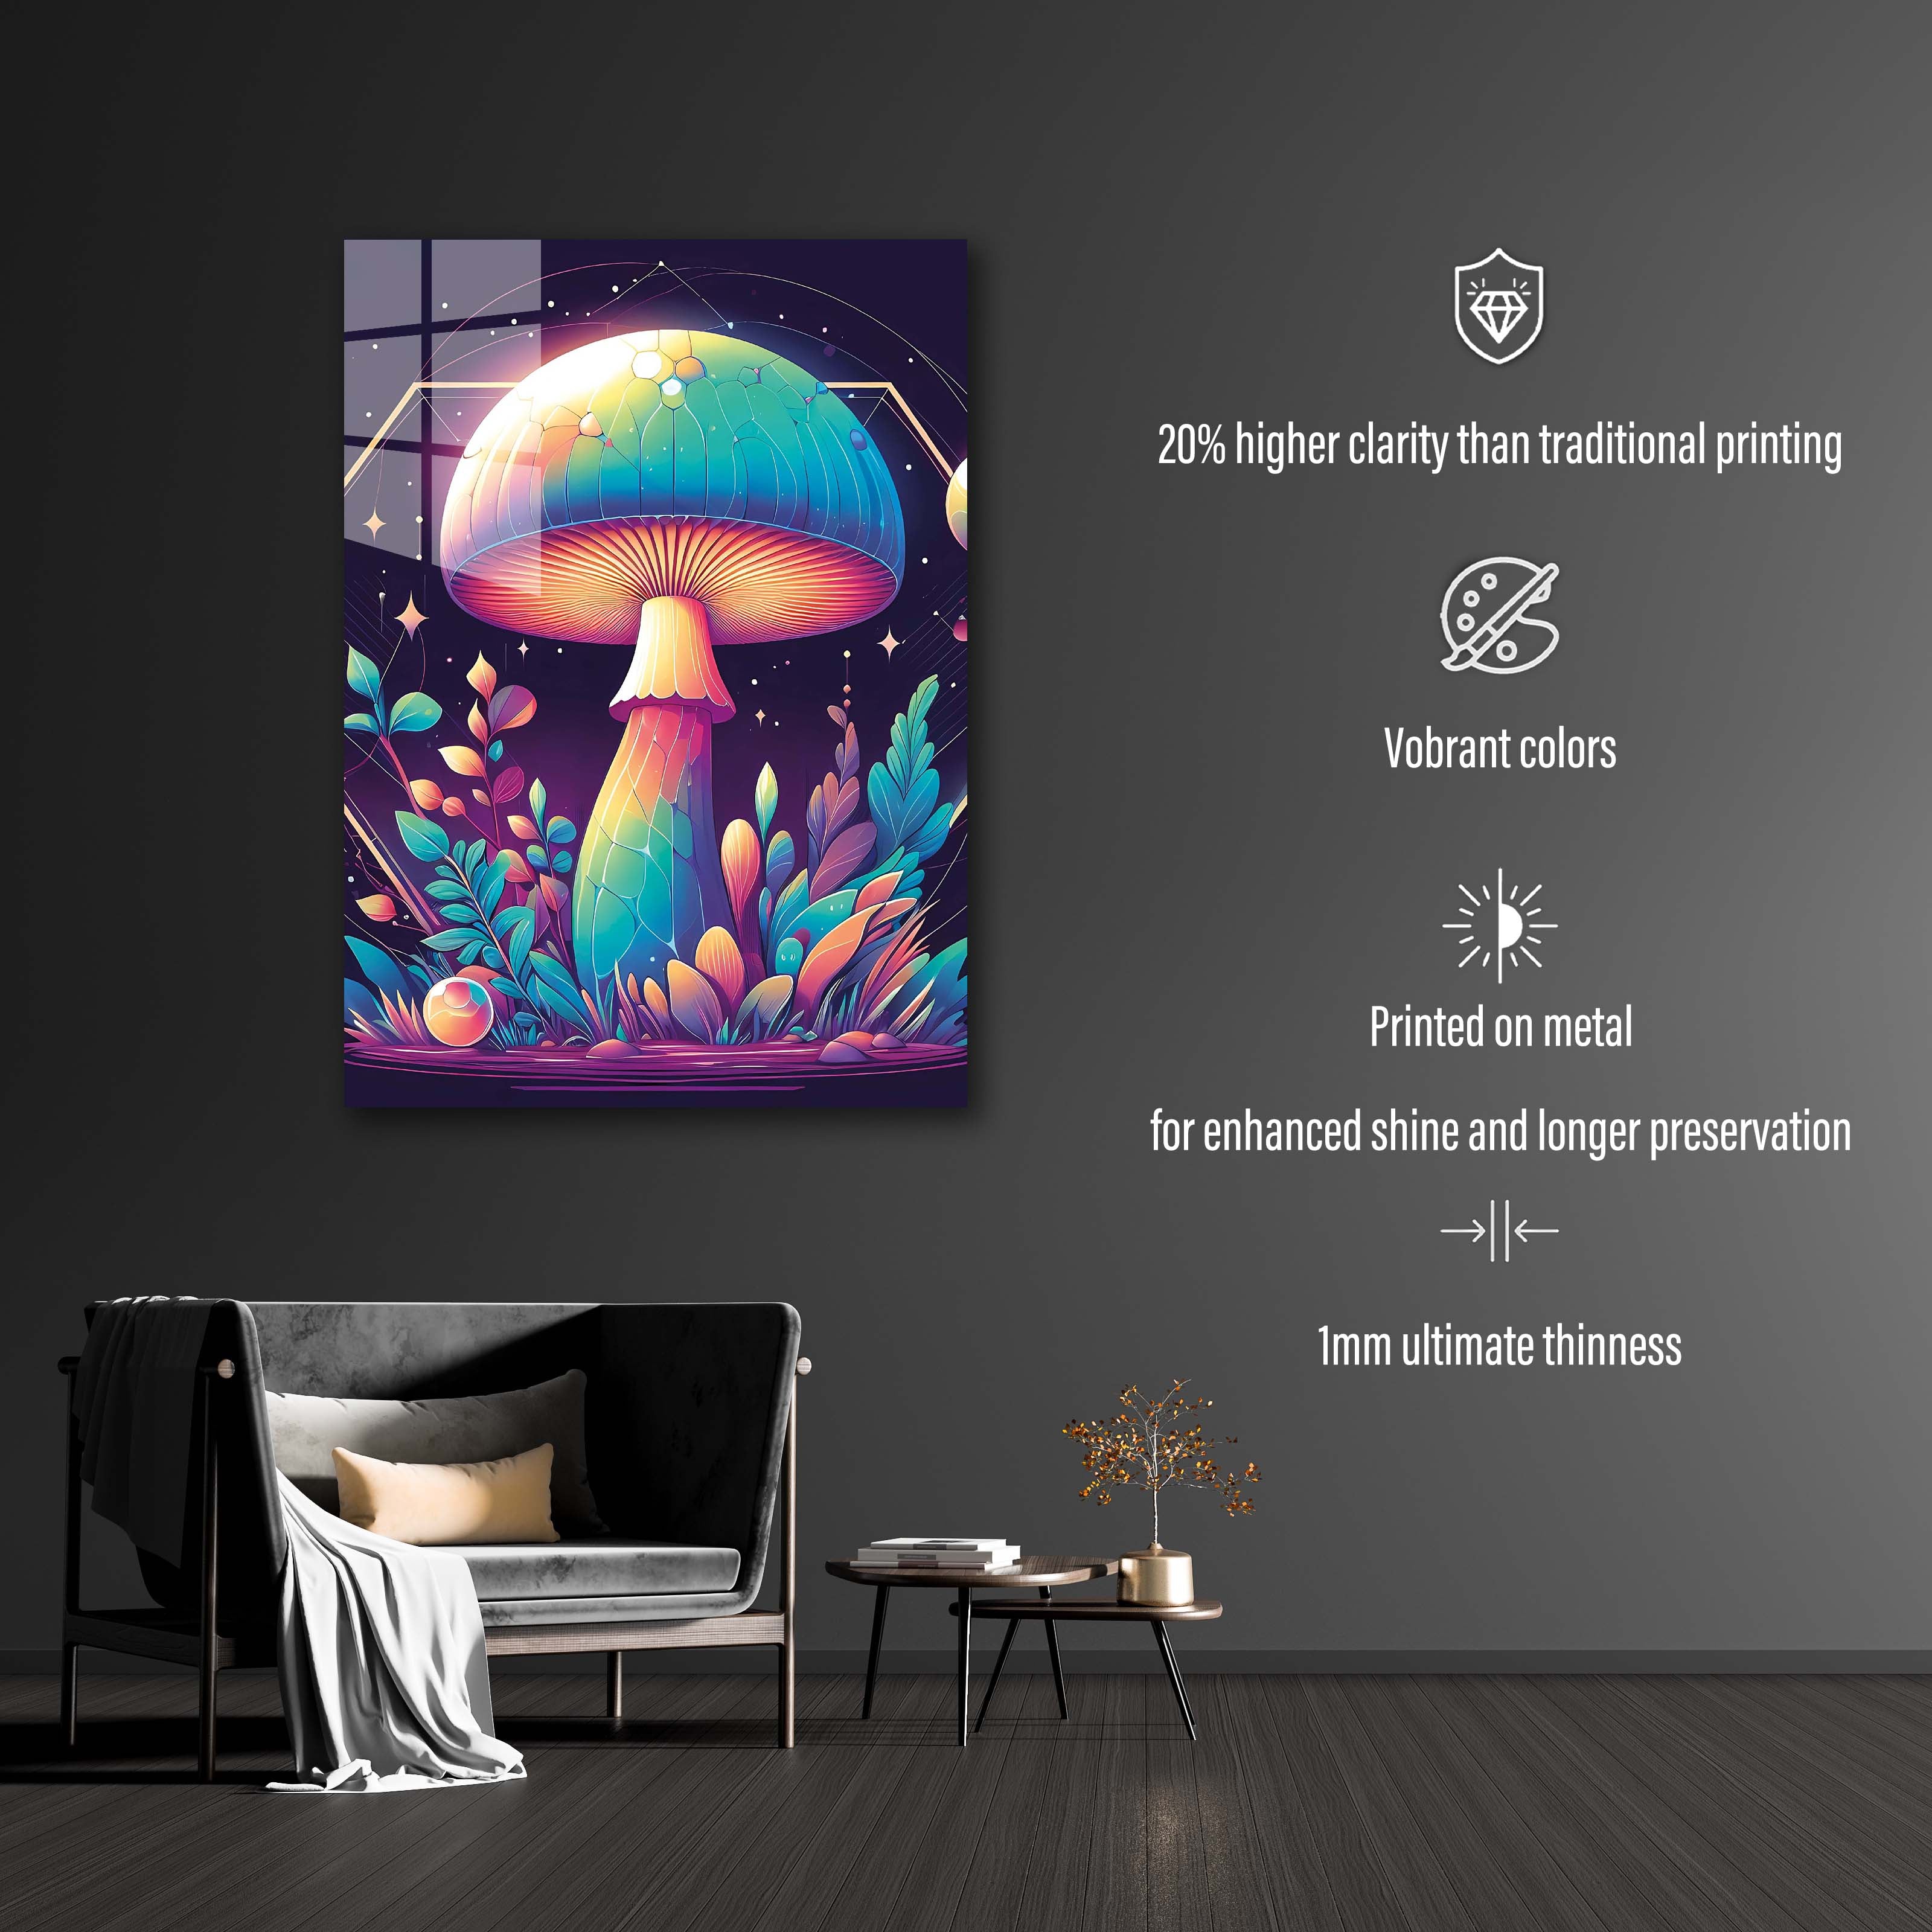 Ancient Dark Mushrooms-designed by @Krizeggers